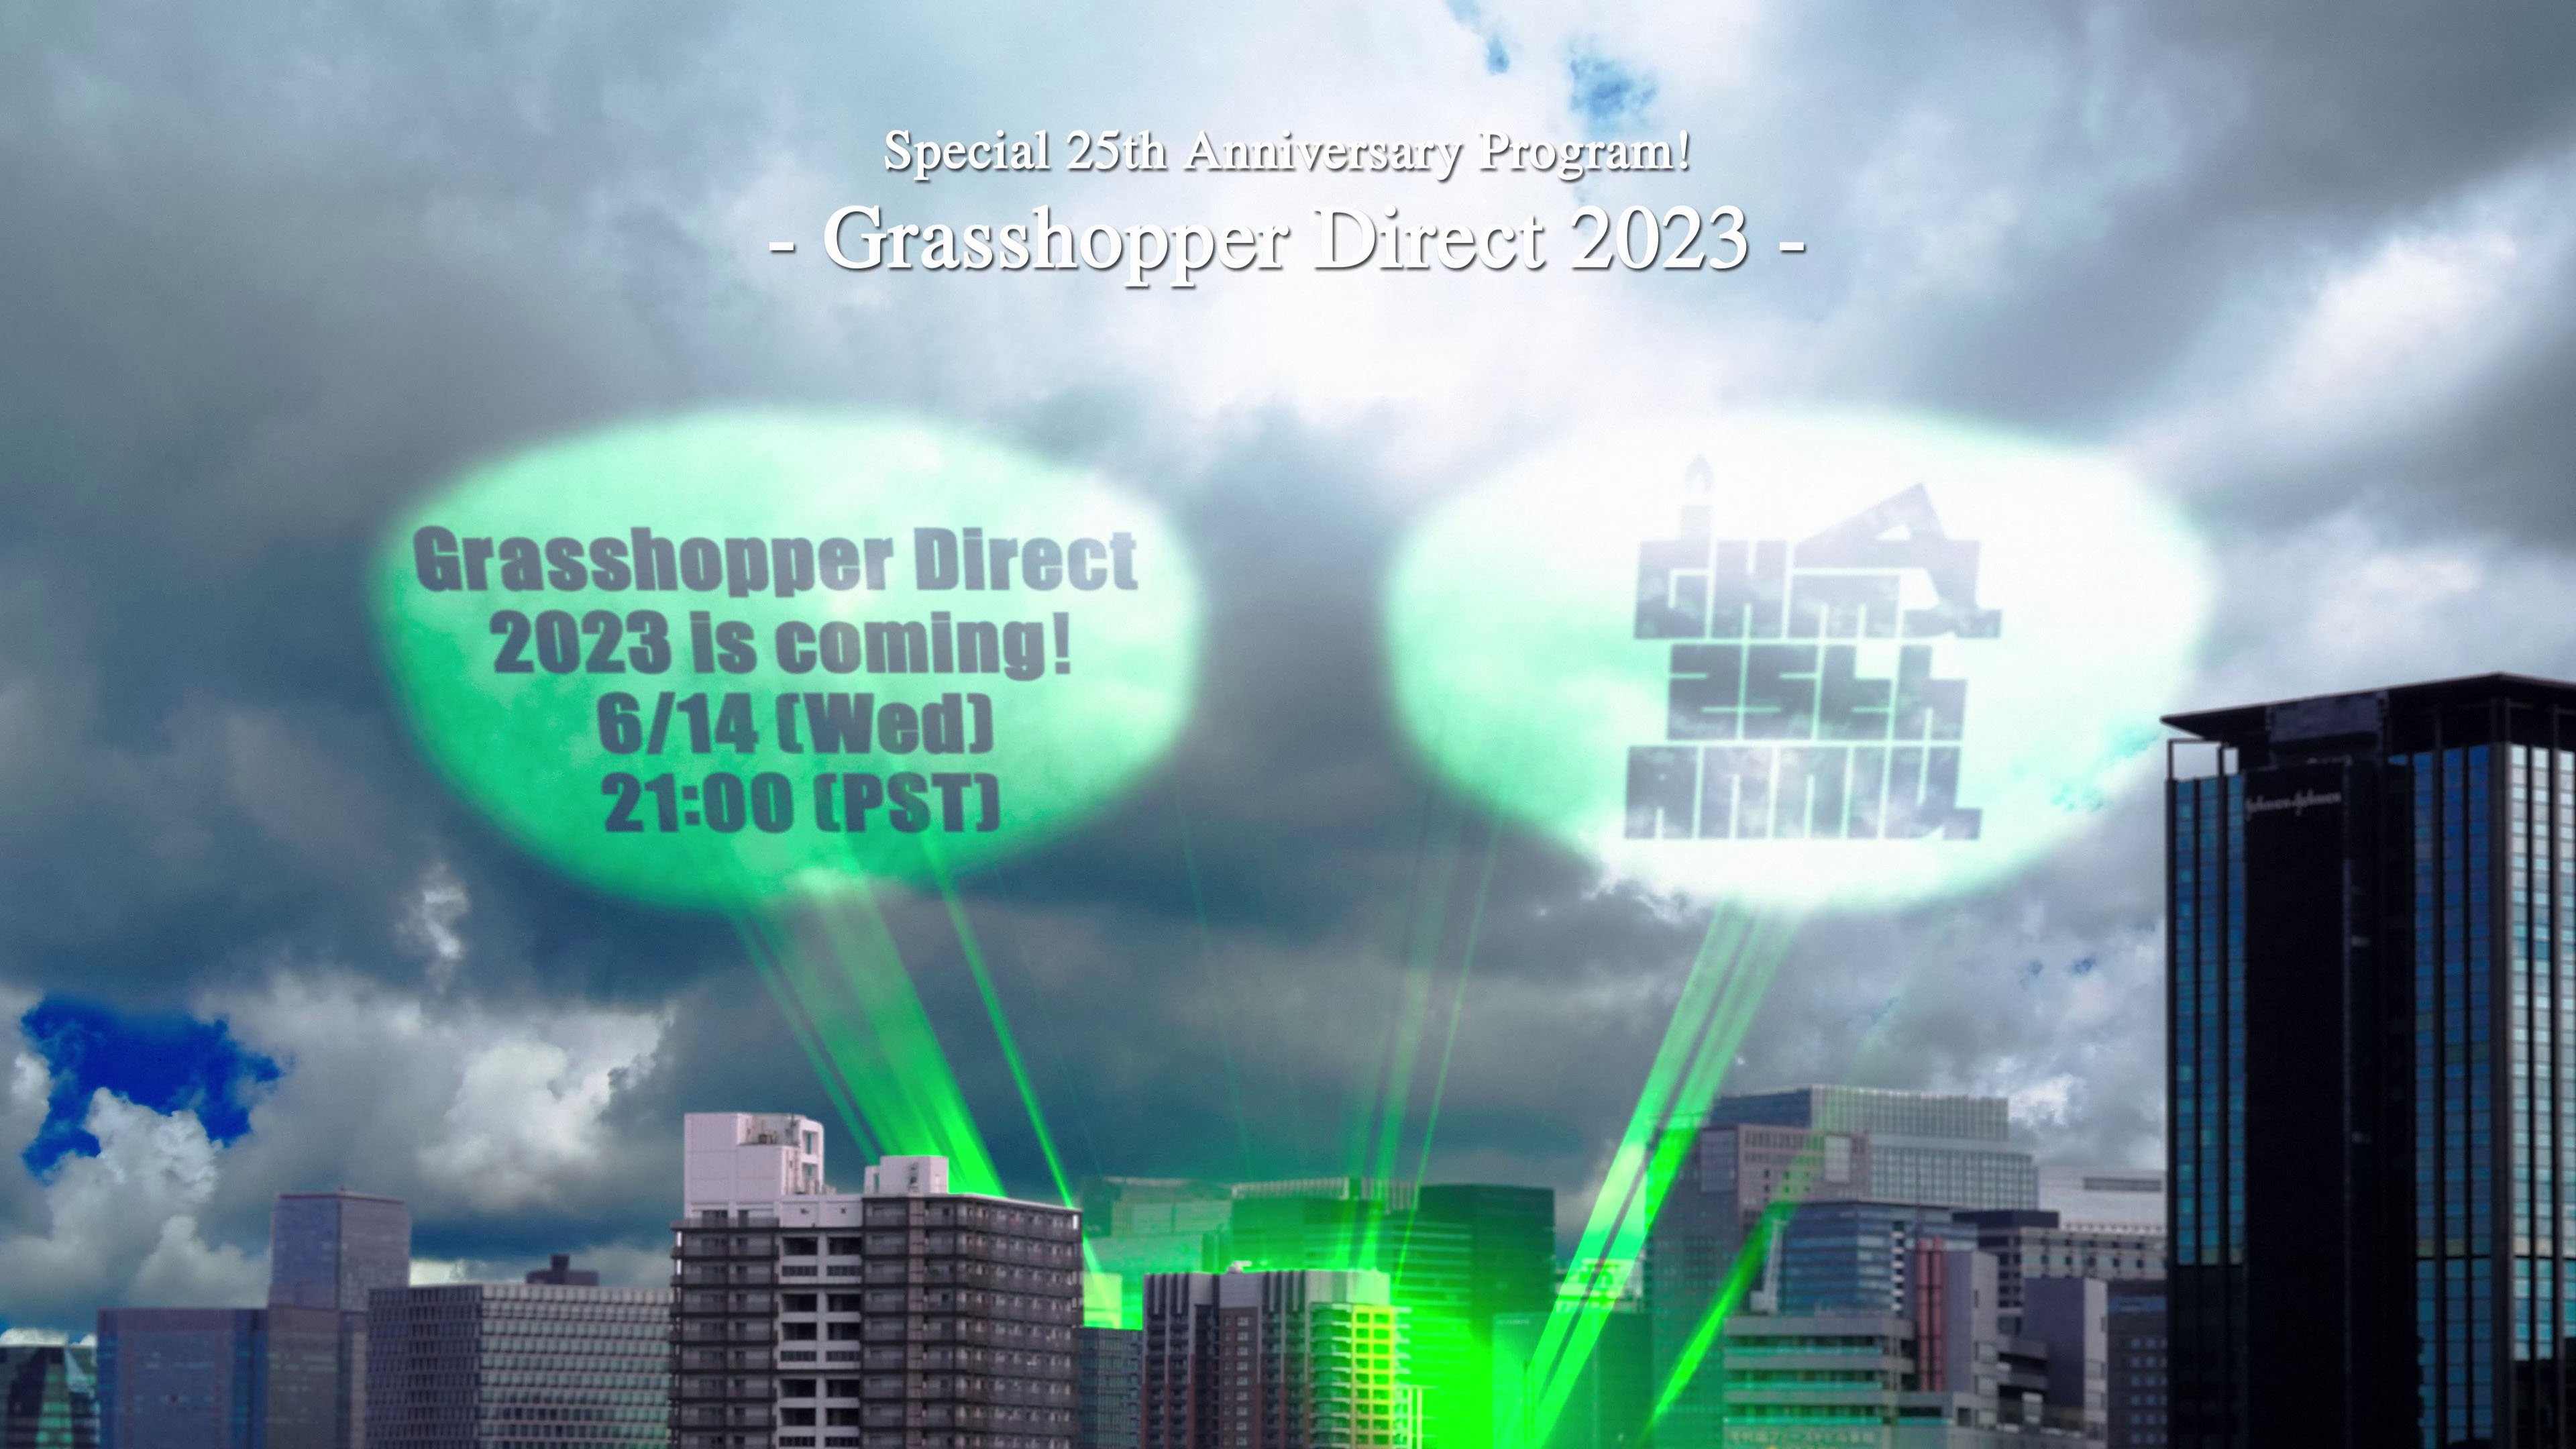 Grasshopper Direct 2023